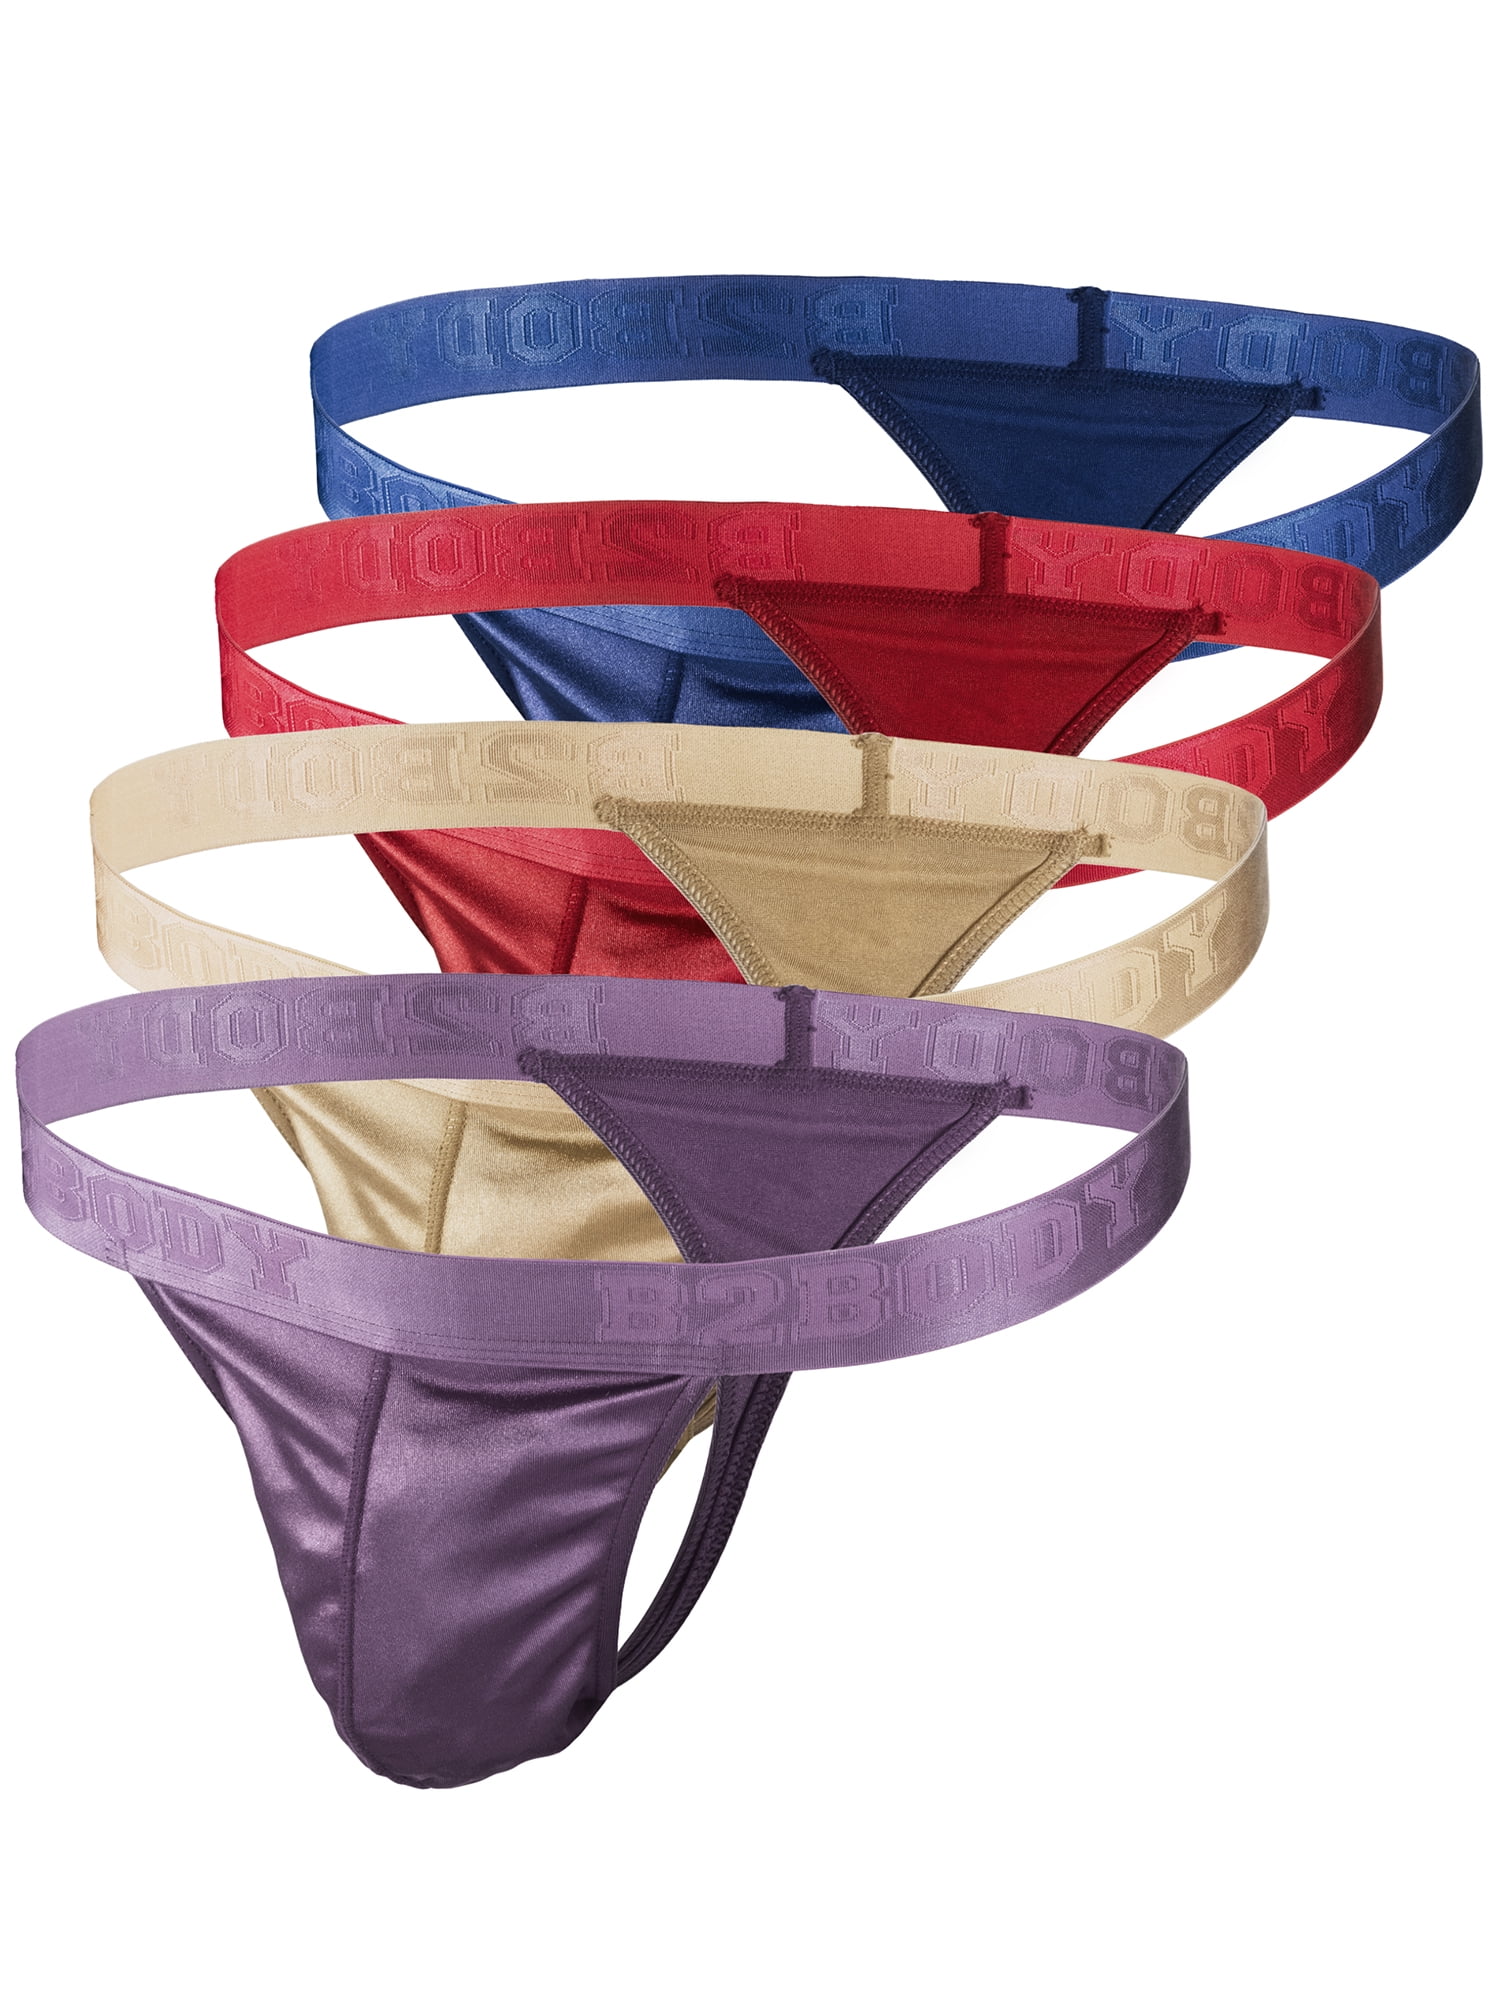 5 Colors Closecret Men Cotton Underwear Stretchy T Back G-String Medium 